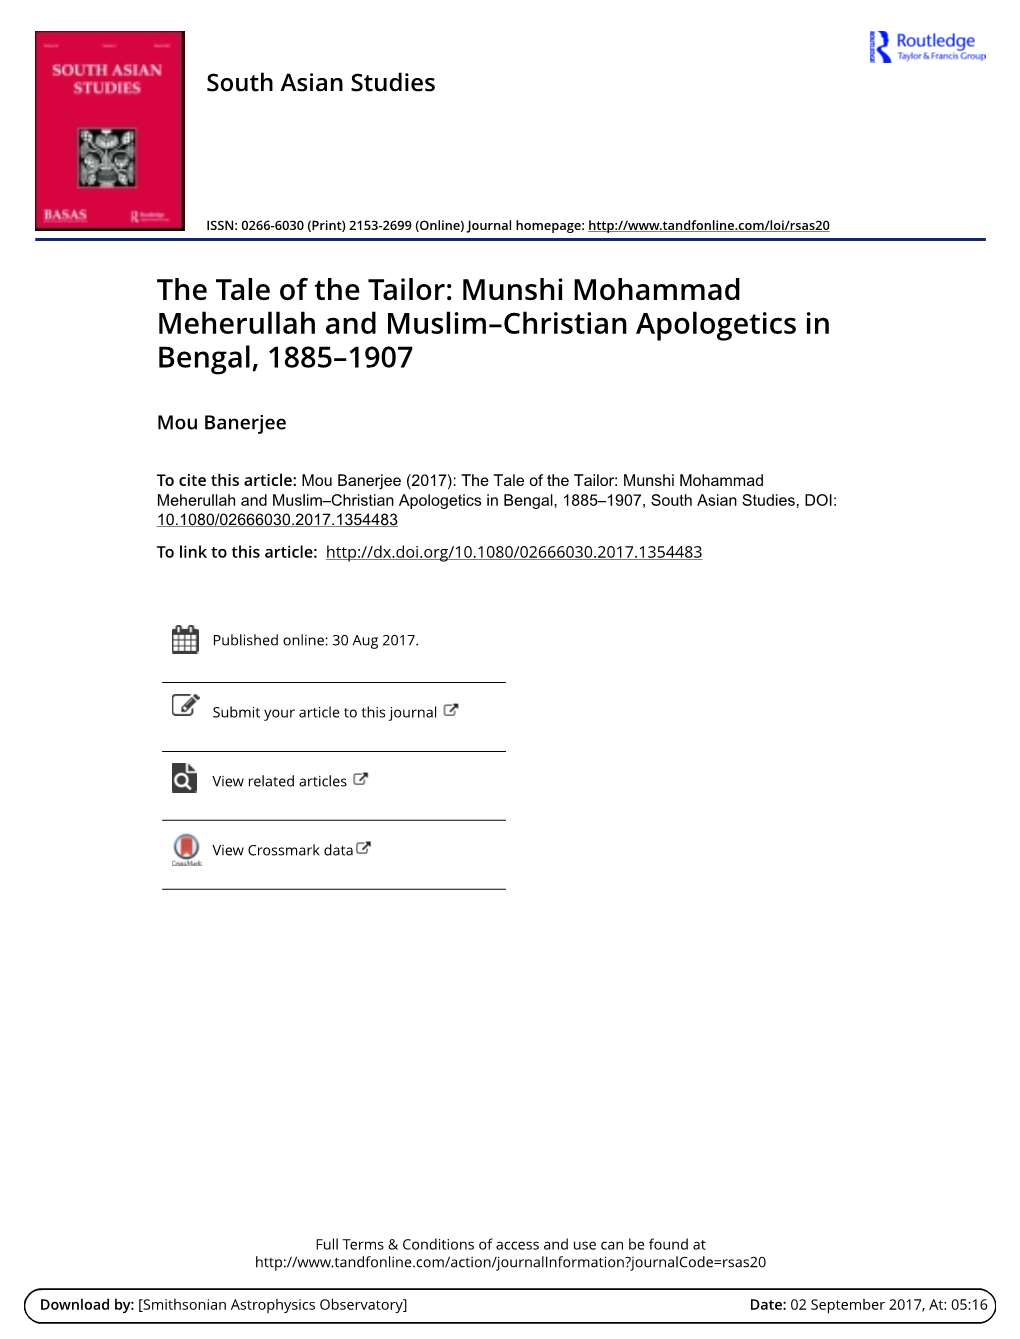 Munshi Mohammad Meherullah and Muslim–Christian Apologetics in Bengal, 1885–1907